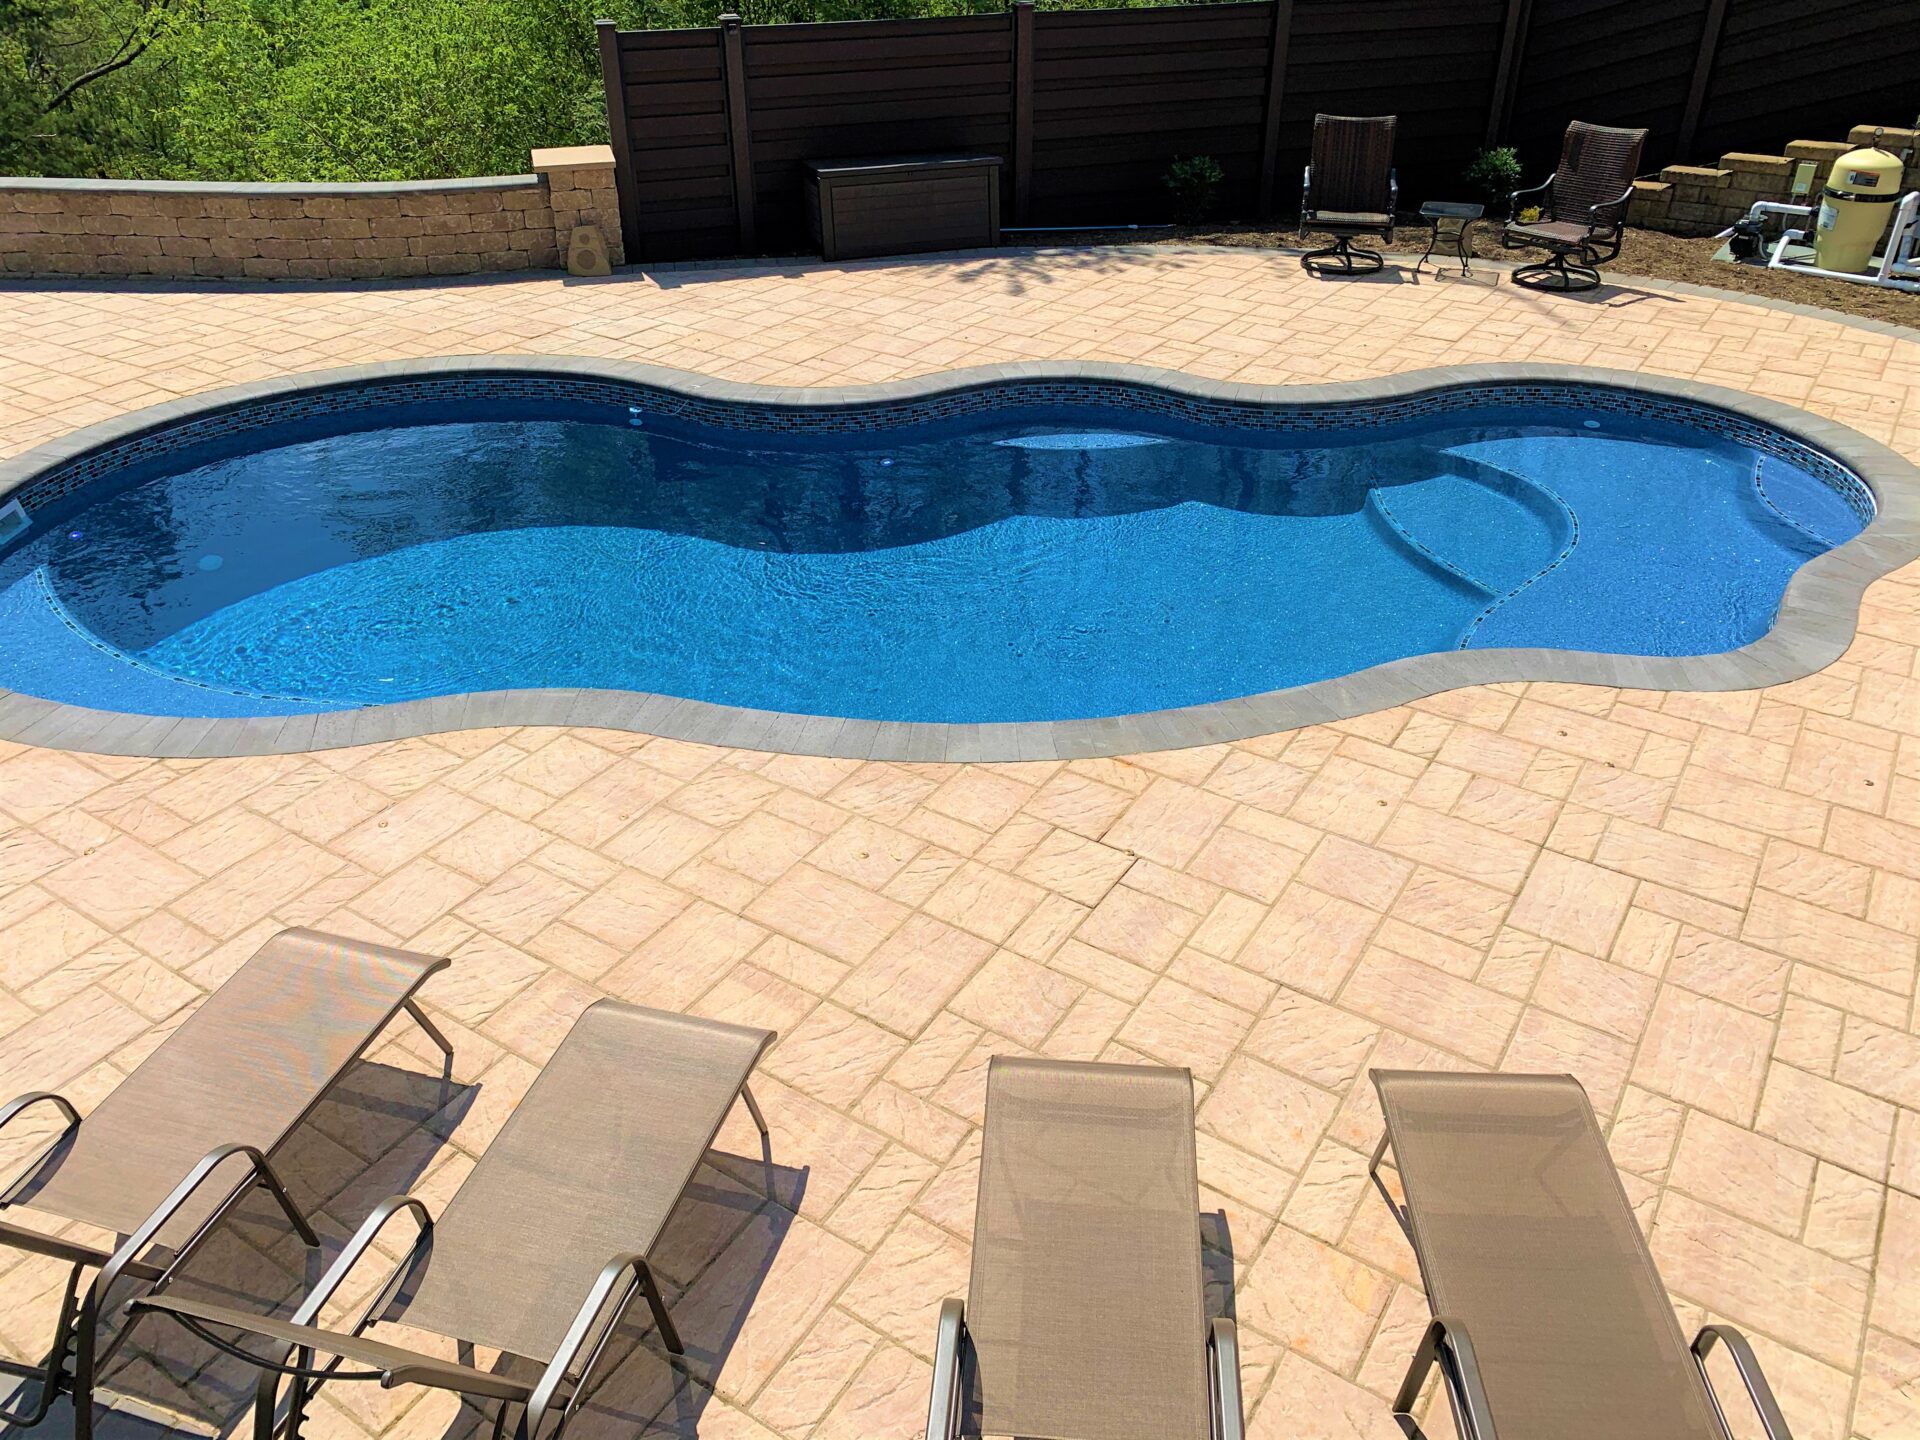 An irregular-shaped swimming pool